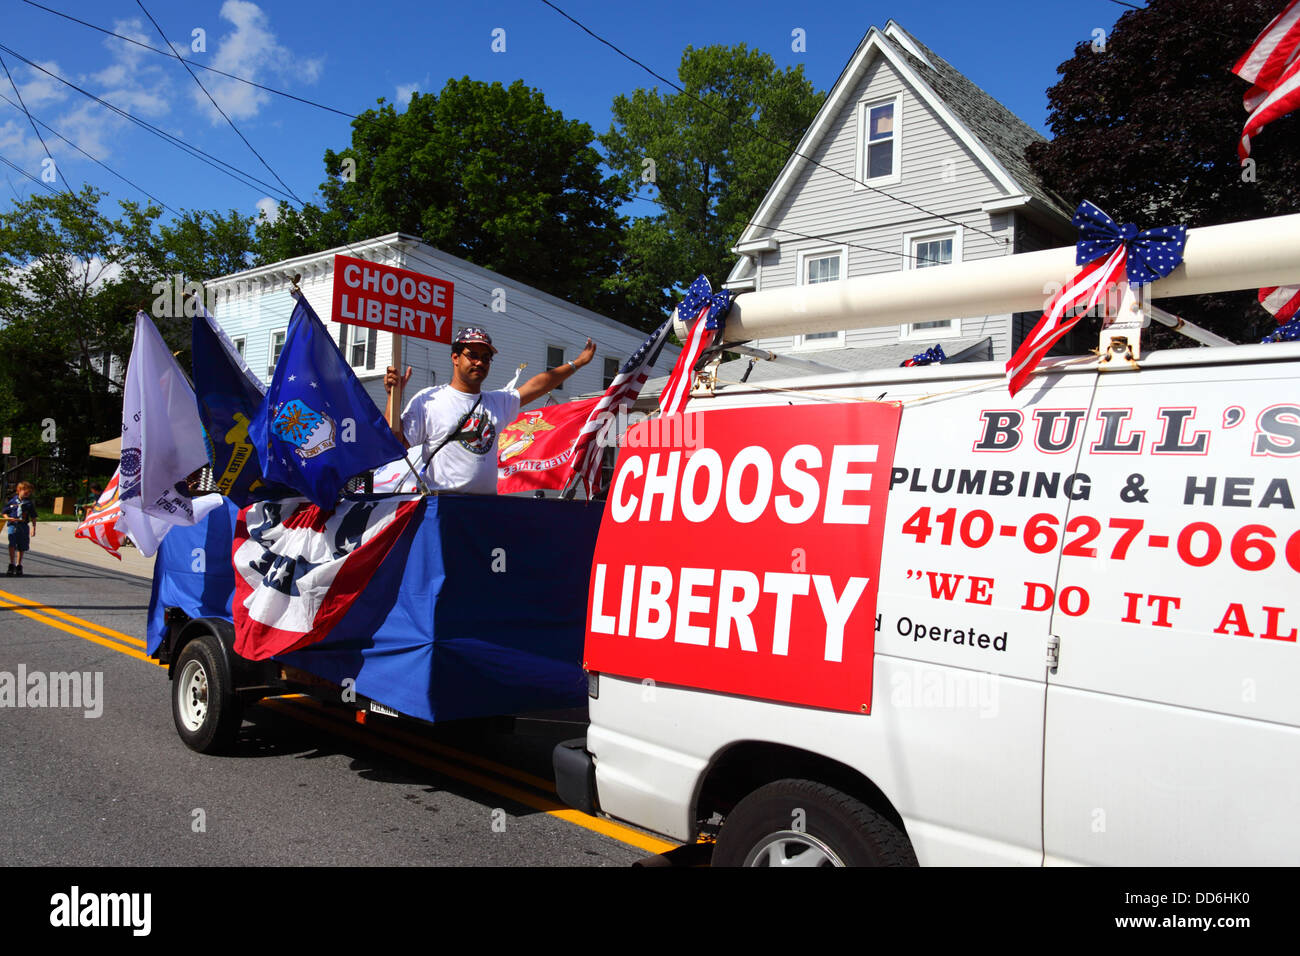 Man Holding Choose Liberty Sign in Trailer derrière le minibus d'affaires local pendant le 4th juillet Parades Independence Day, Catonsville, Maryland, États-Unis Banque D'Images